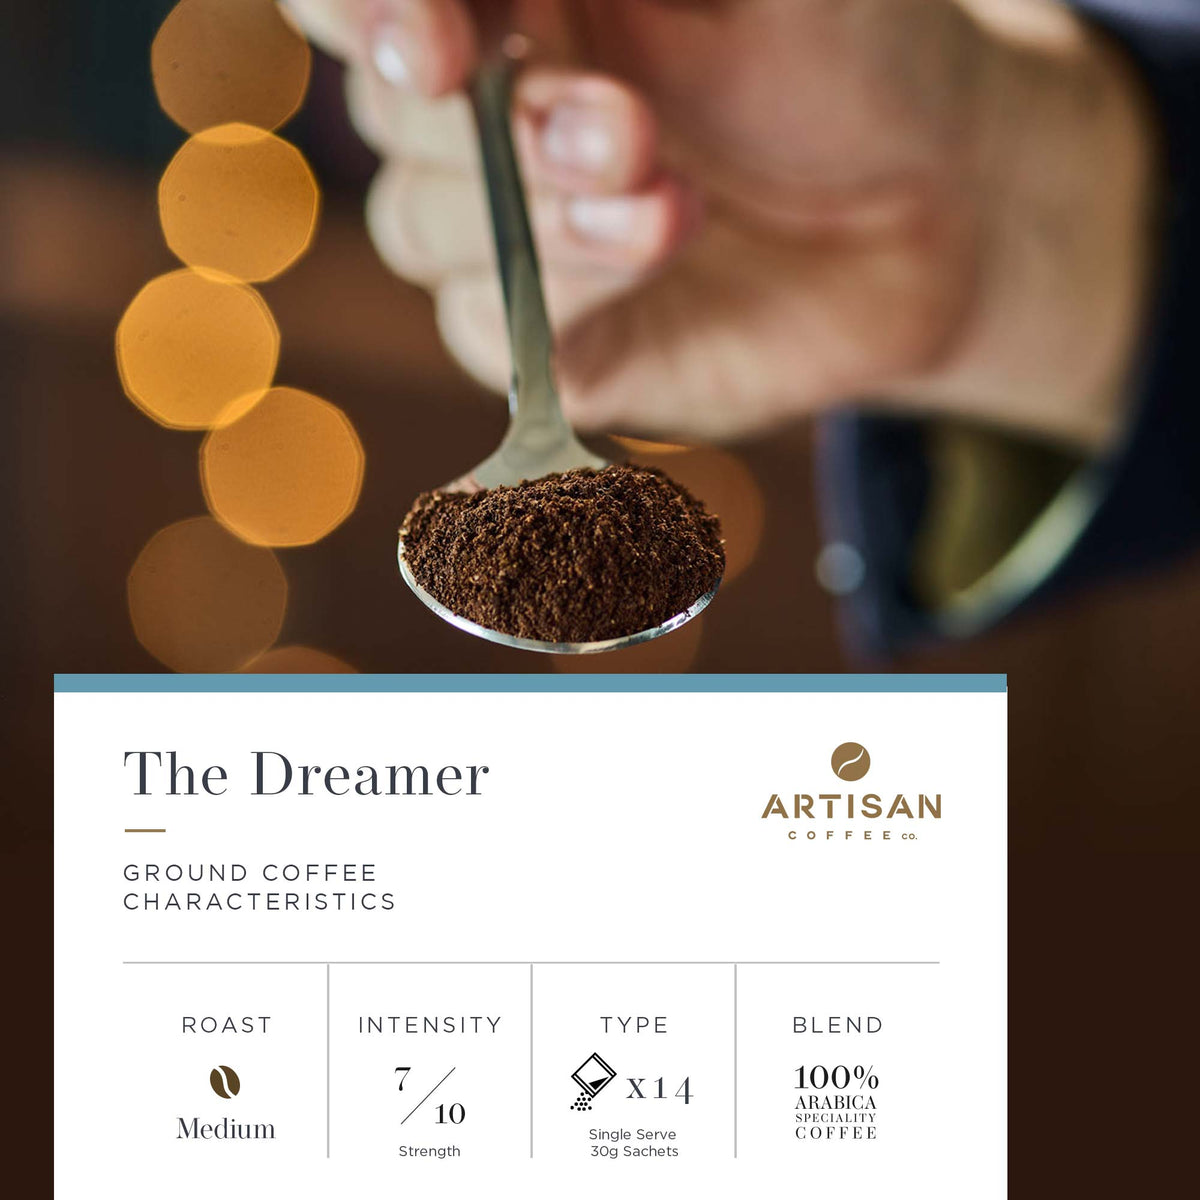 Artisan Coffee Co The Dreamer ground coffee Infographic characteristics